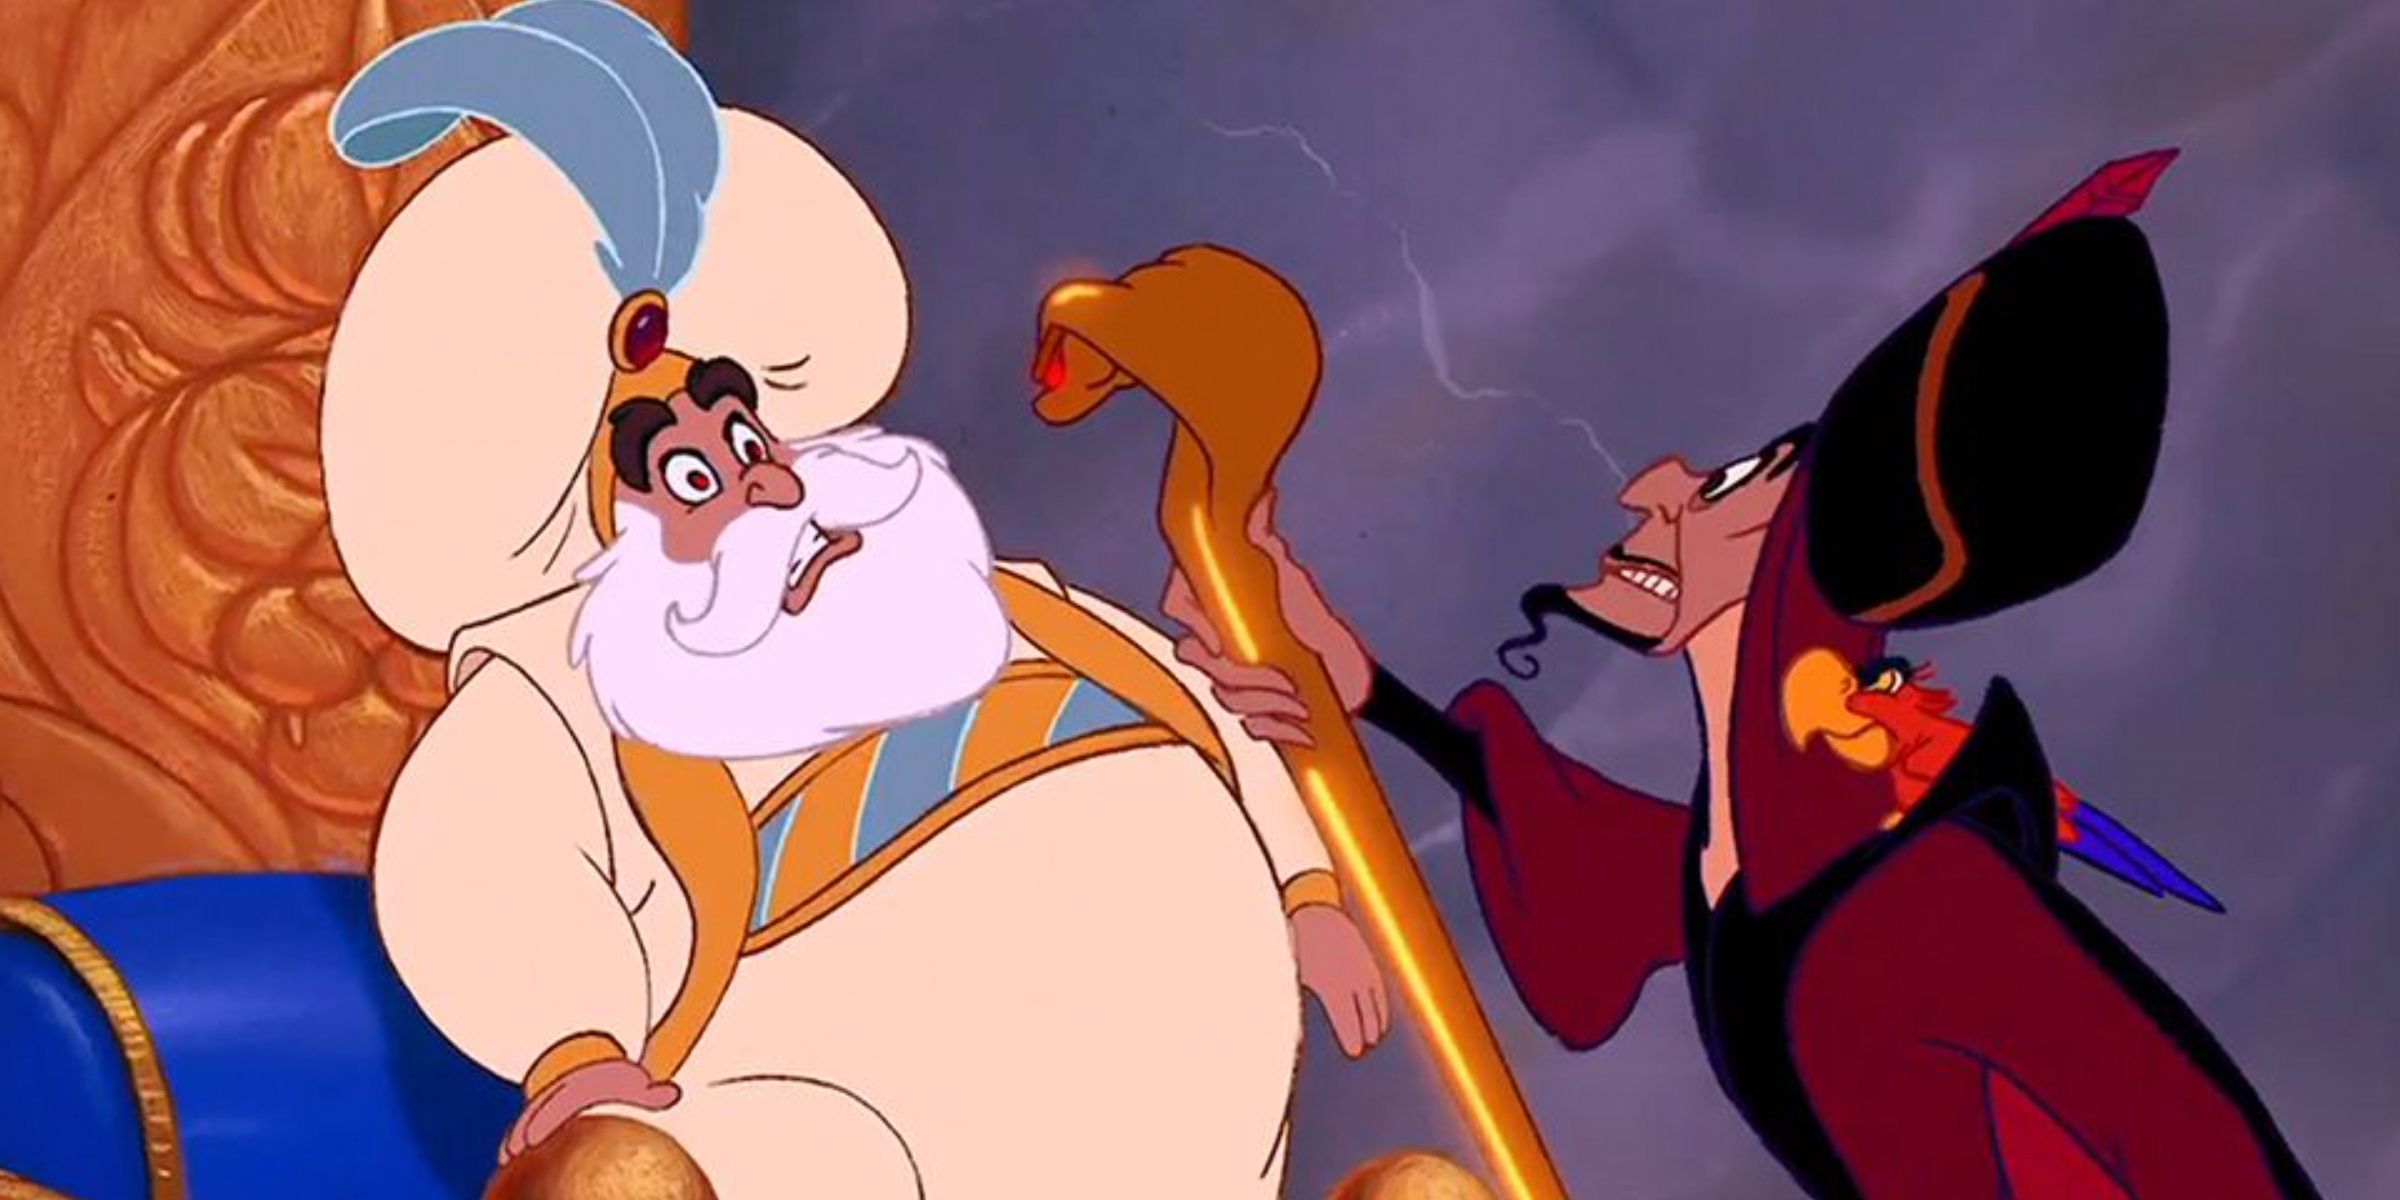 Jafar hypnotizing the Sultan in the animated Aladdin movie